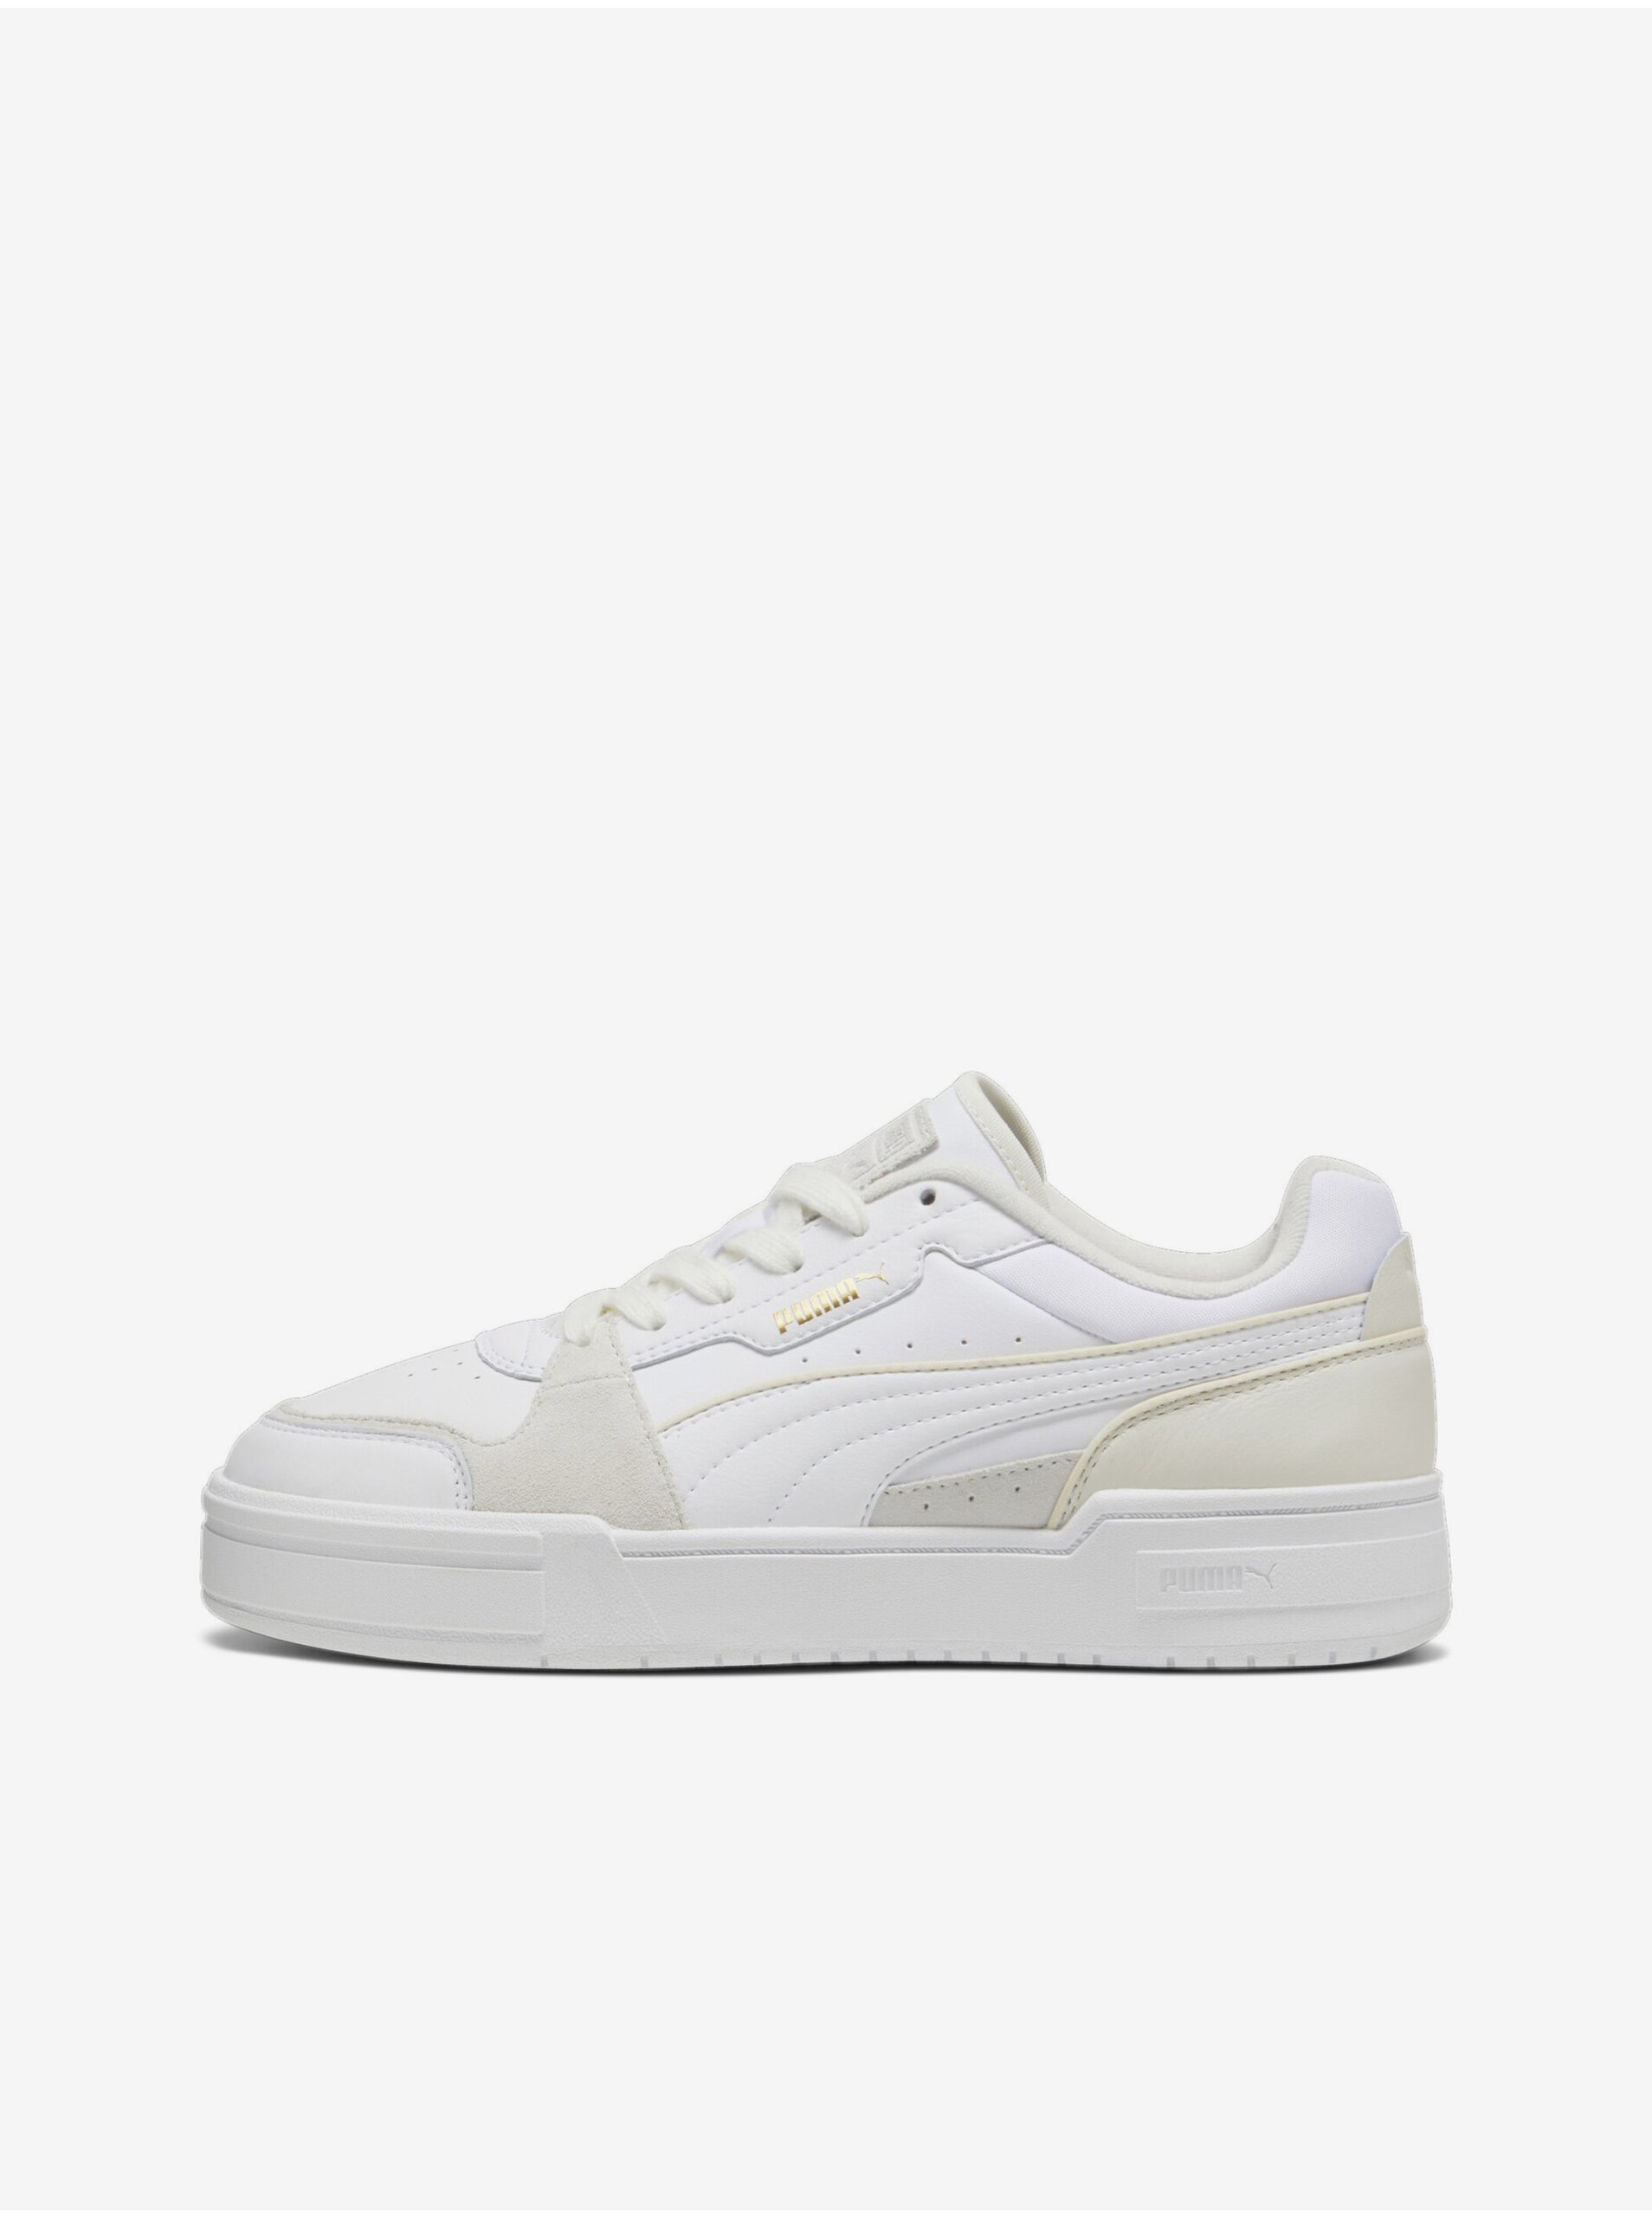 E-shop Biele pánske kožené tenisky Puma CA Pro Lux III